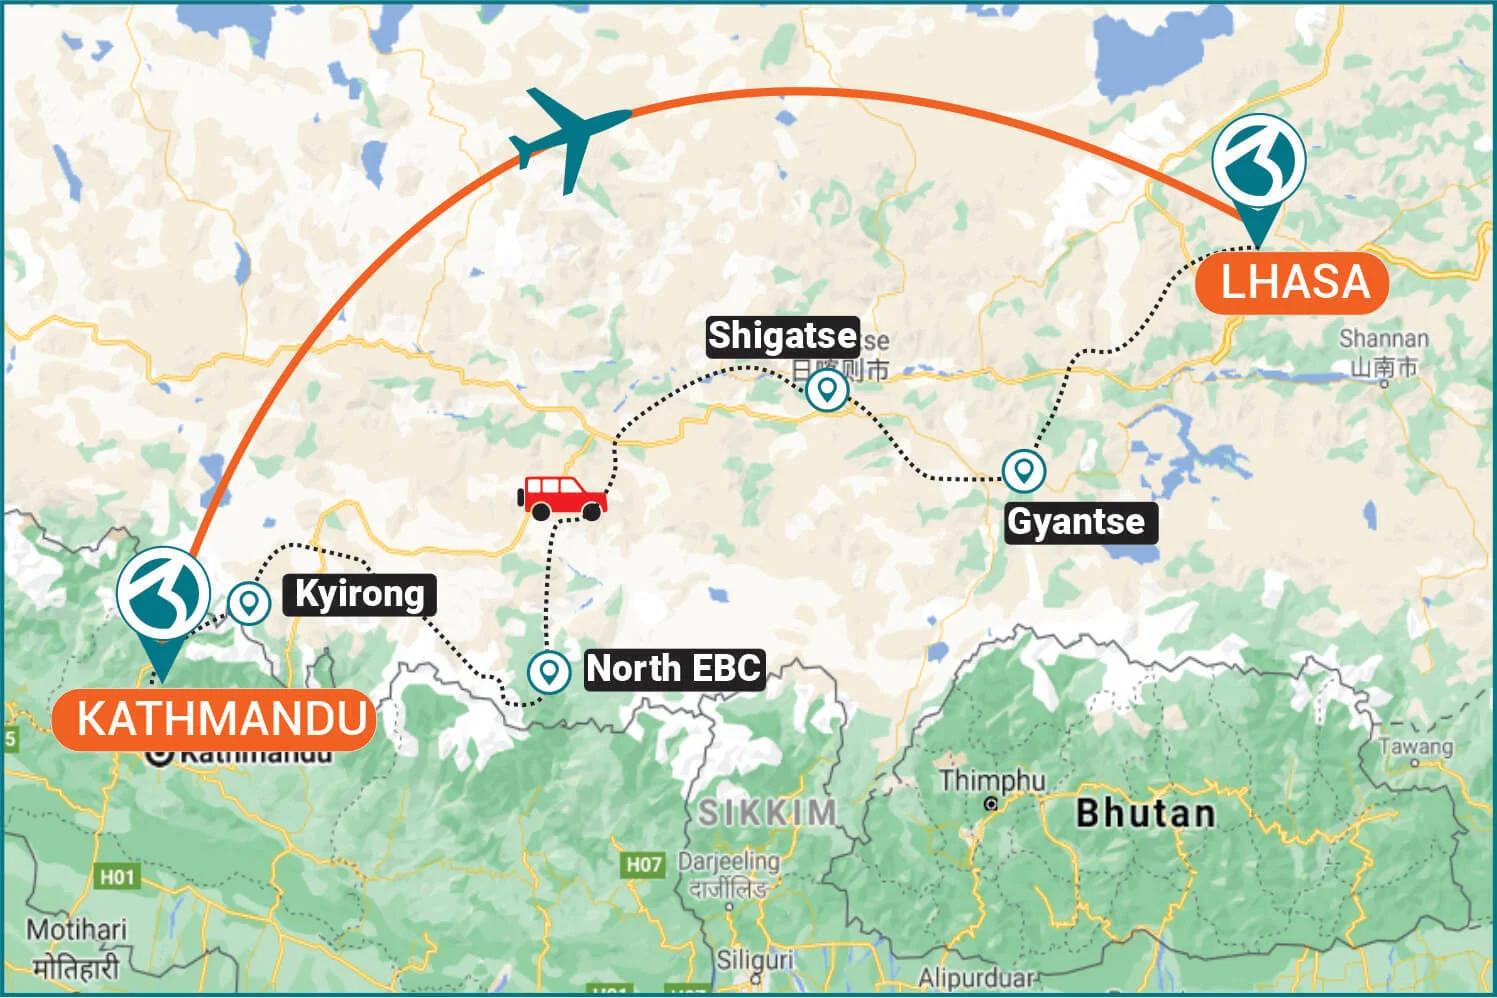 flights-from-kathmandu-to-lhasa